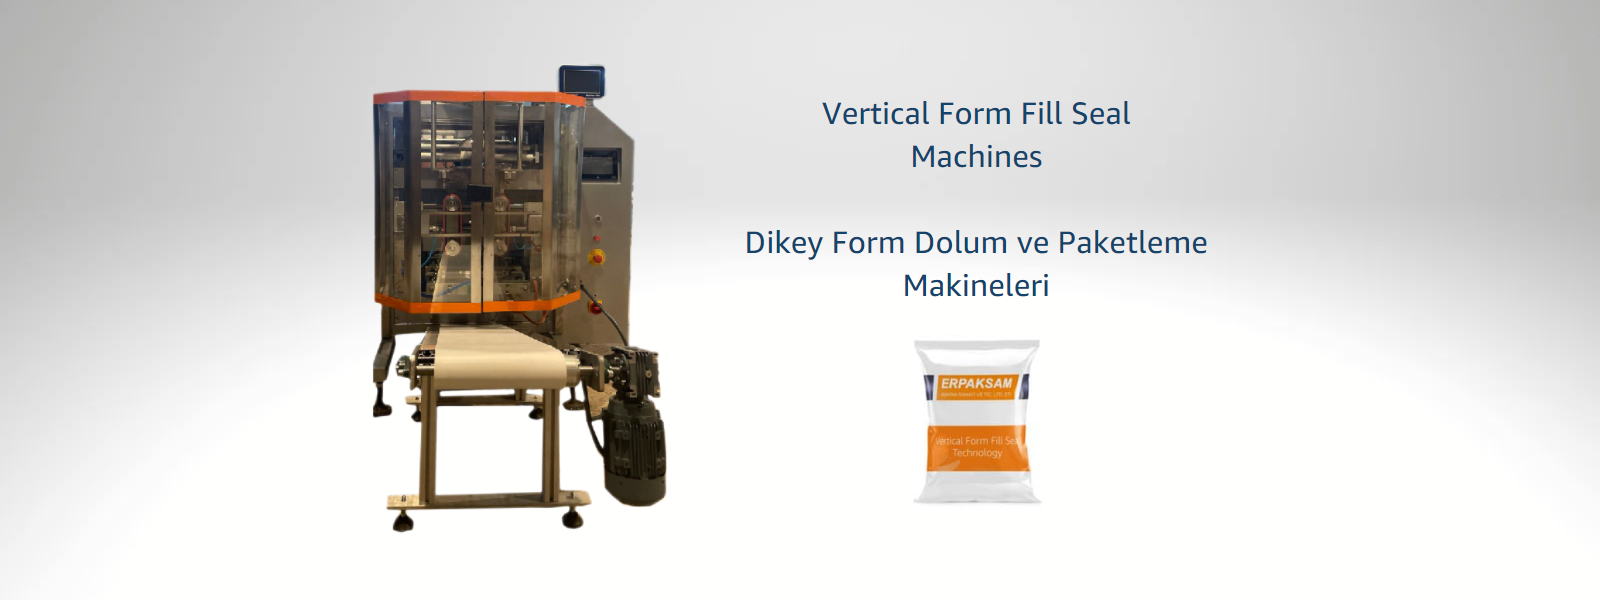 Dikey Form Dolum ve Paketleme Makinesi